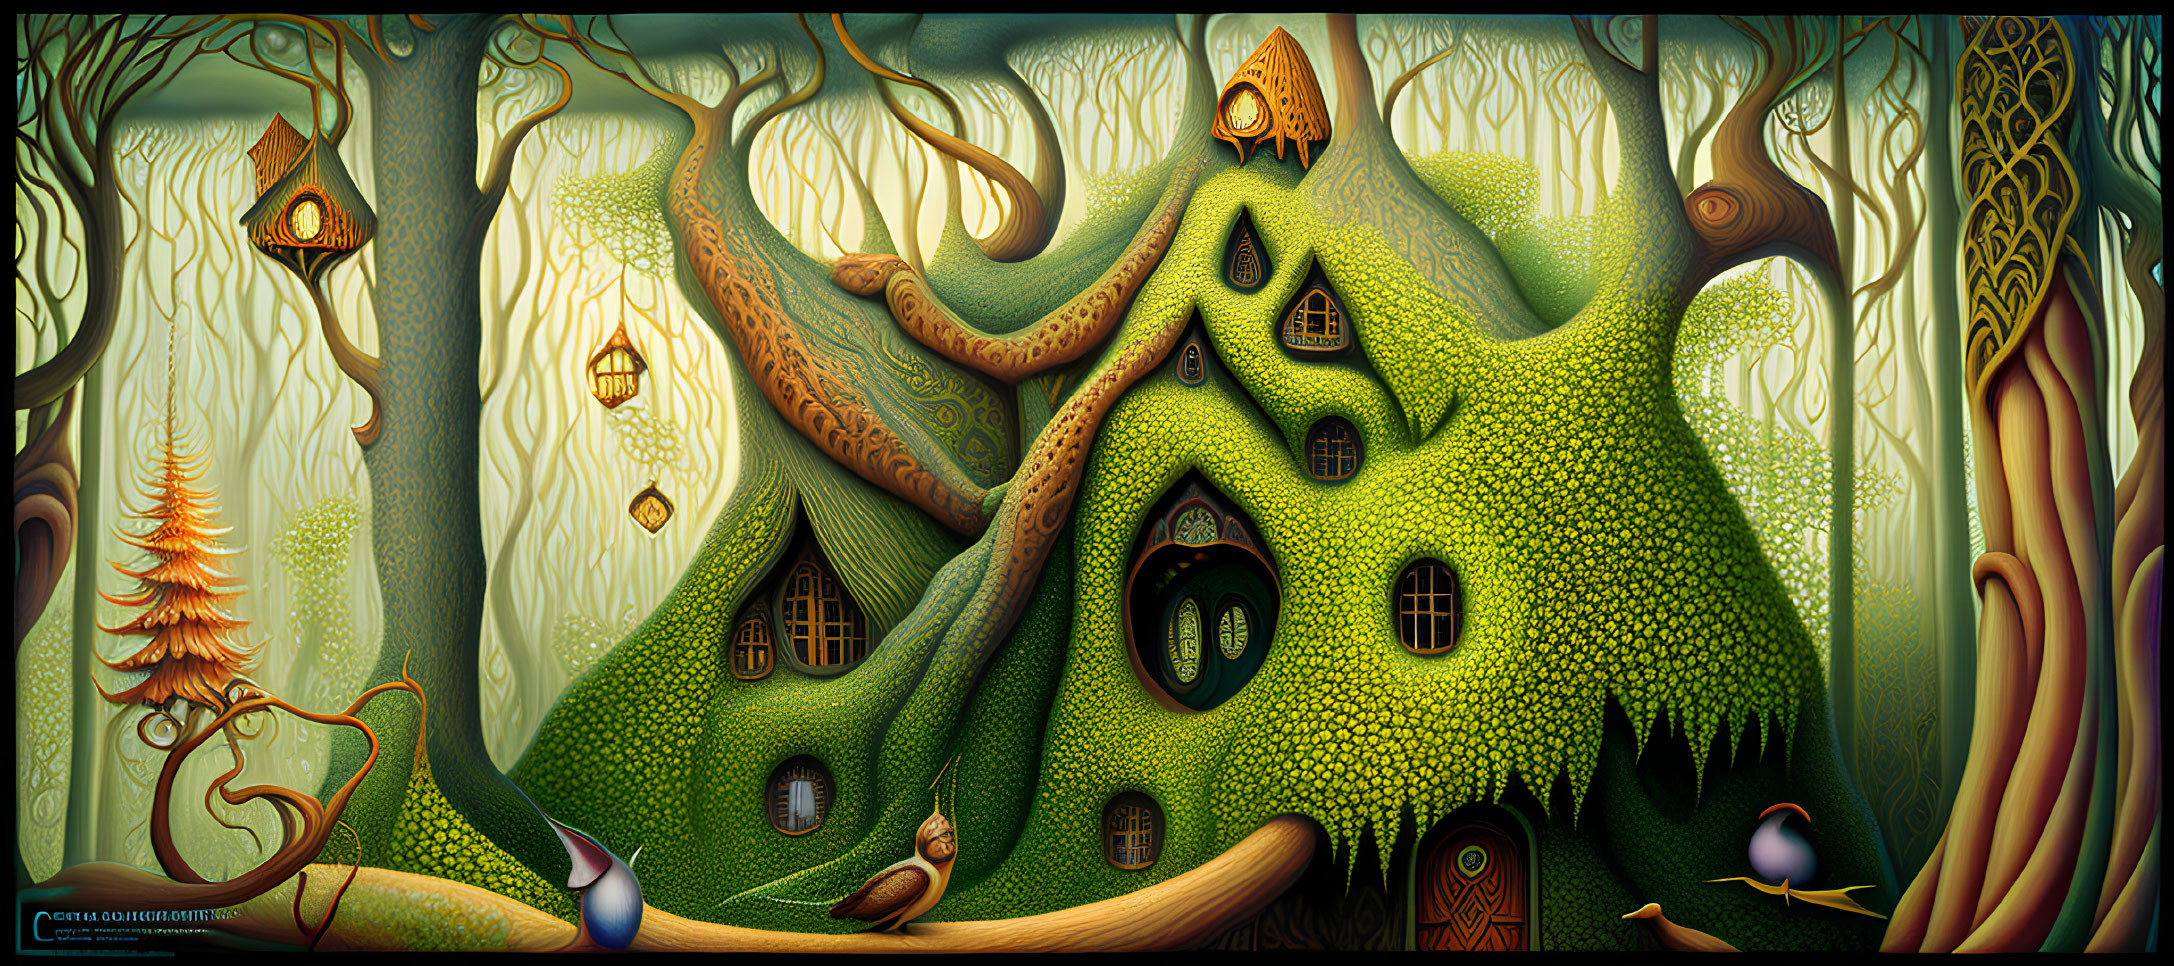 Whimsical treehouses in enchanting forest scene